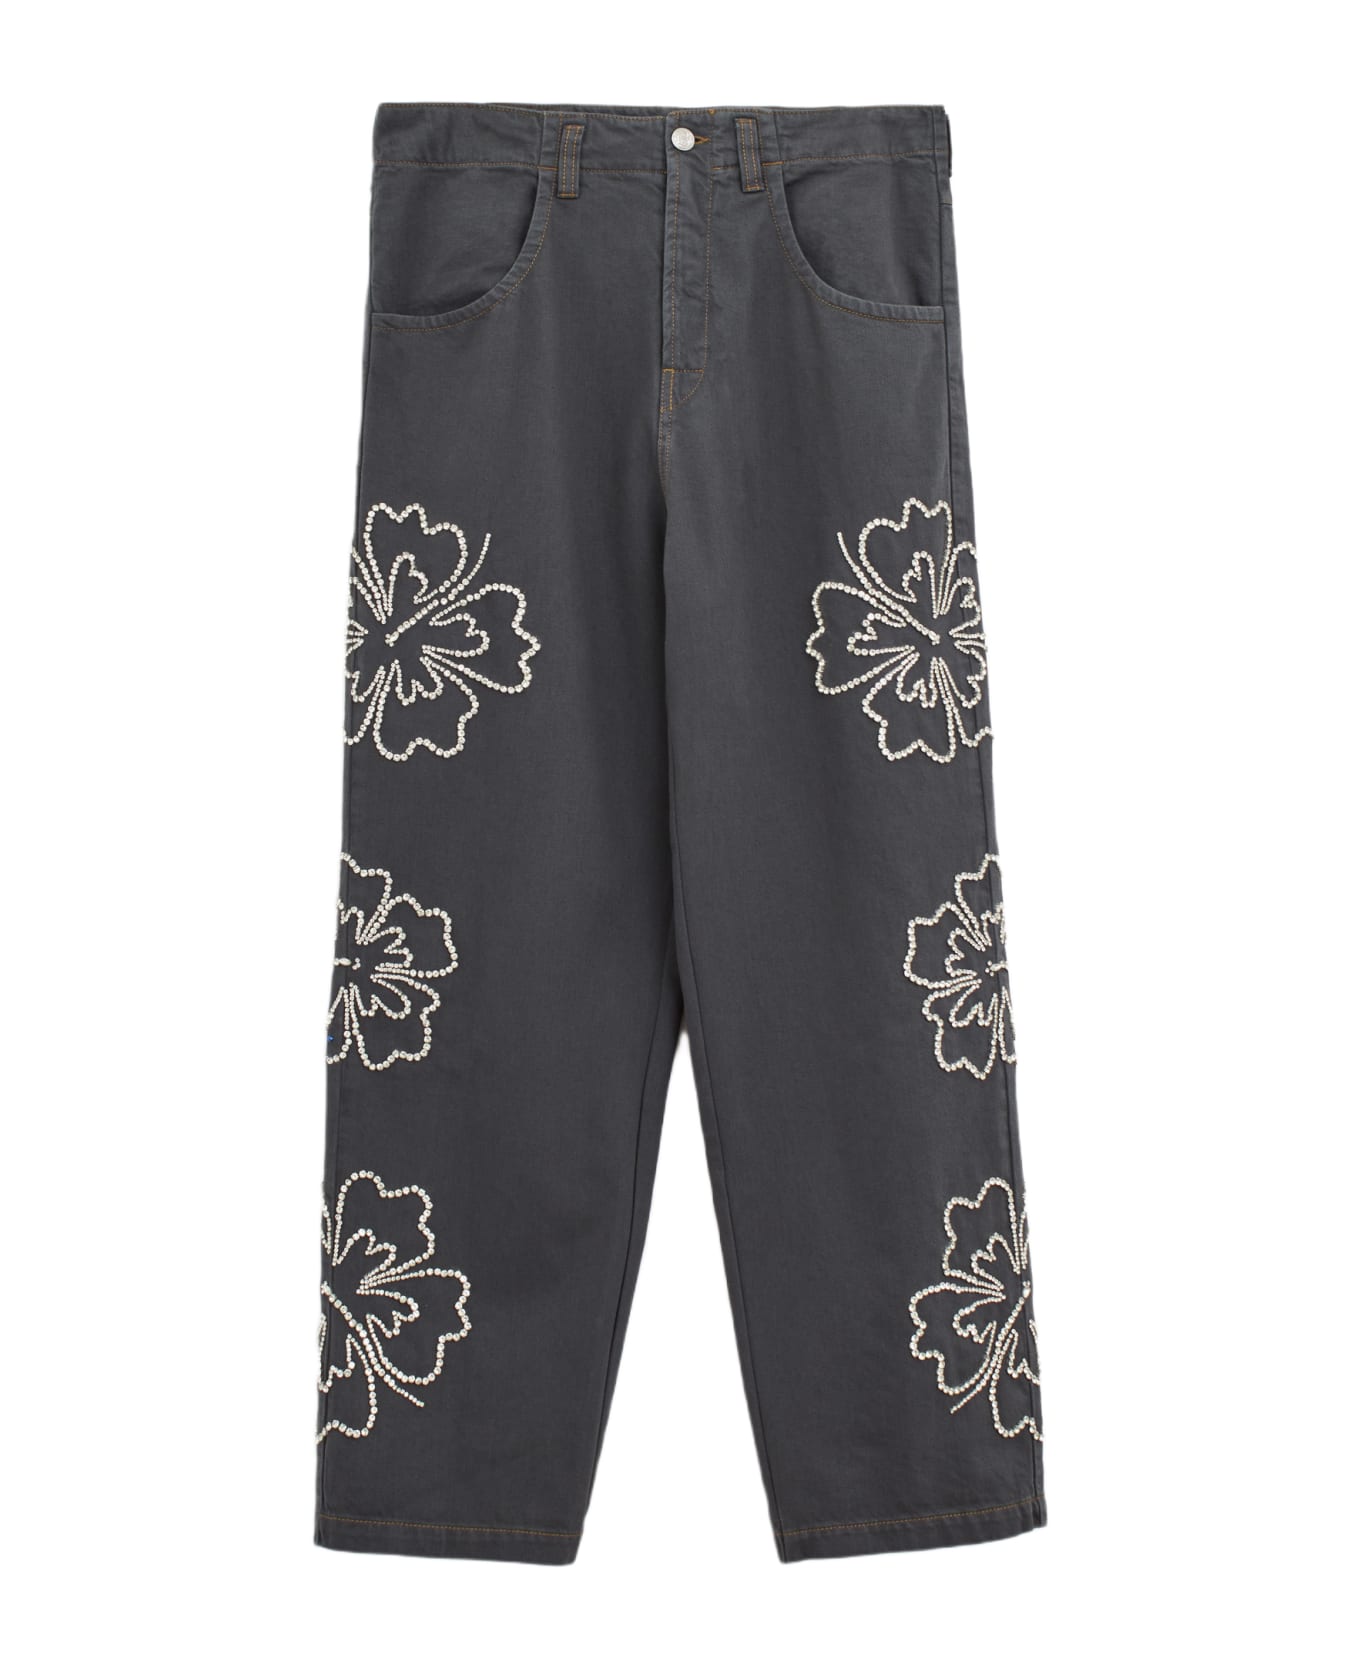 Bluemarble Hibiscus Denim Jeans - grey